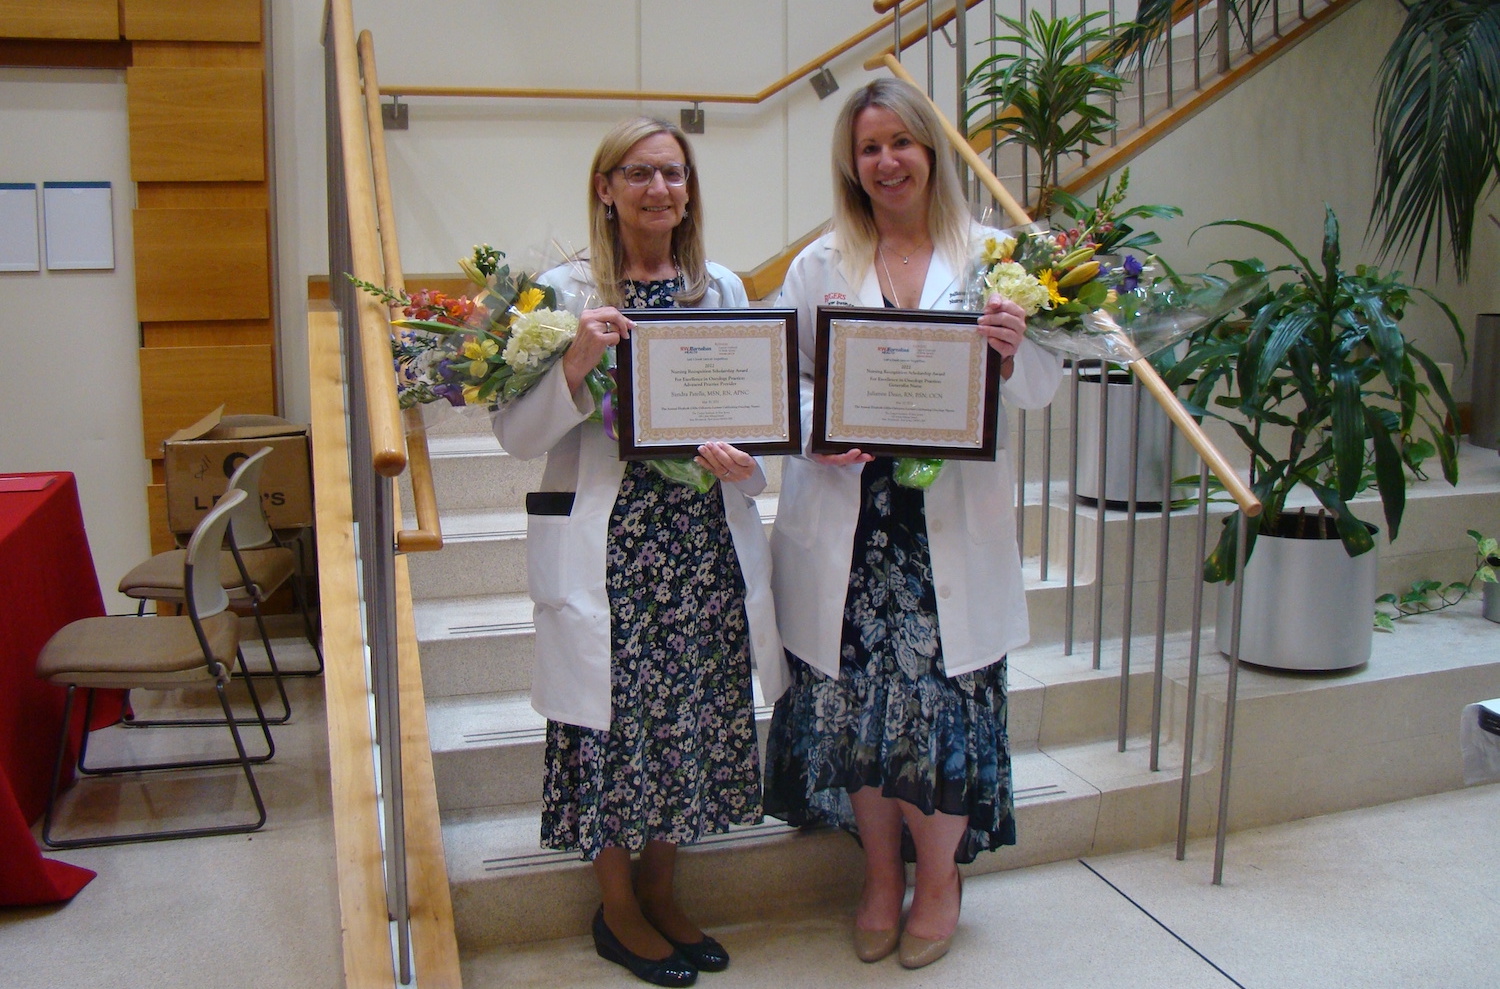 Nursing award winners standing with their certificates